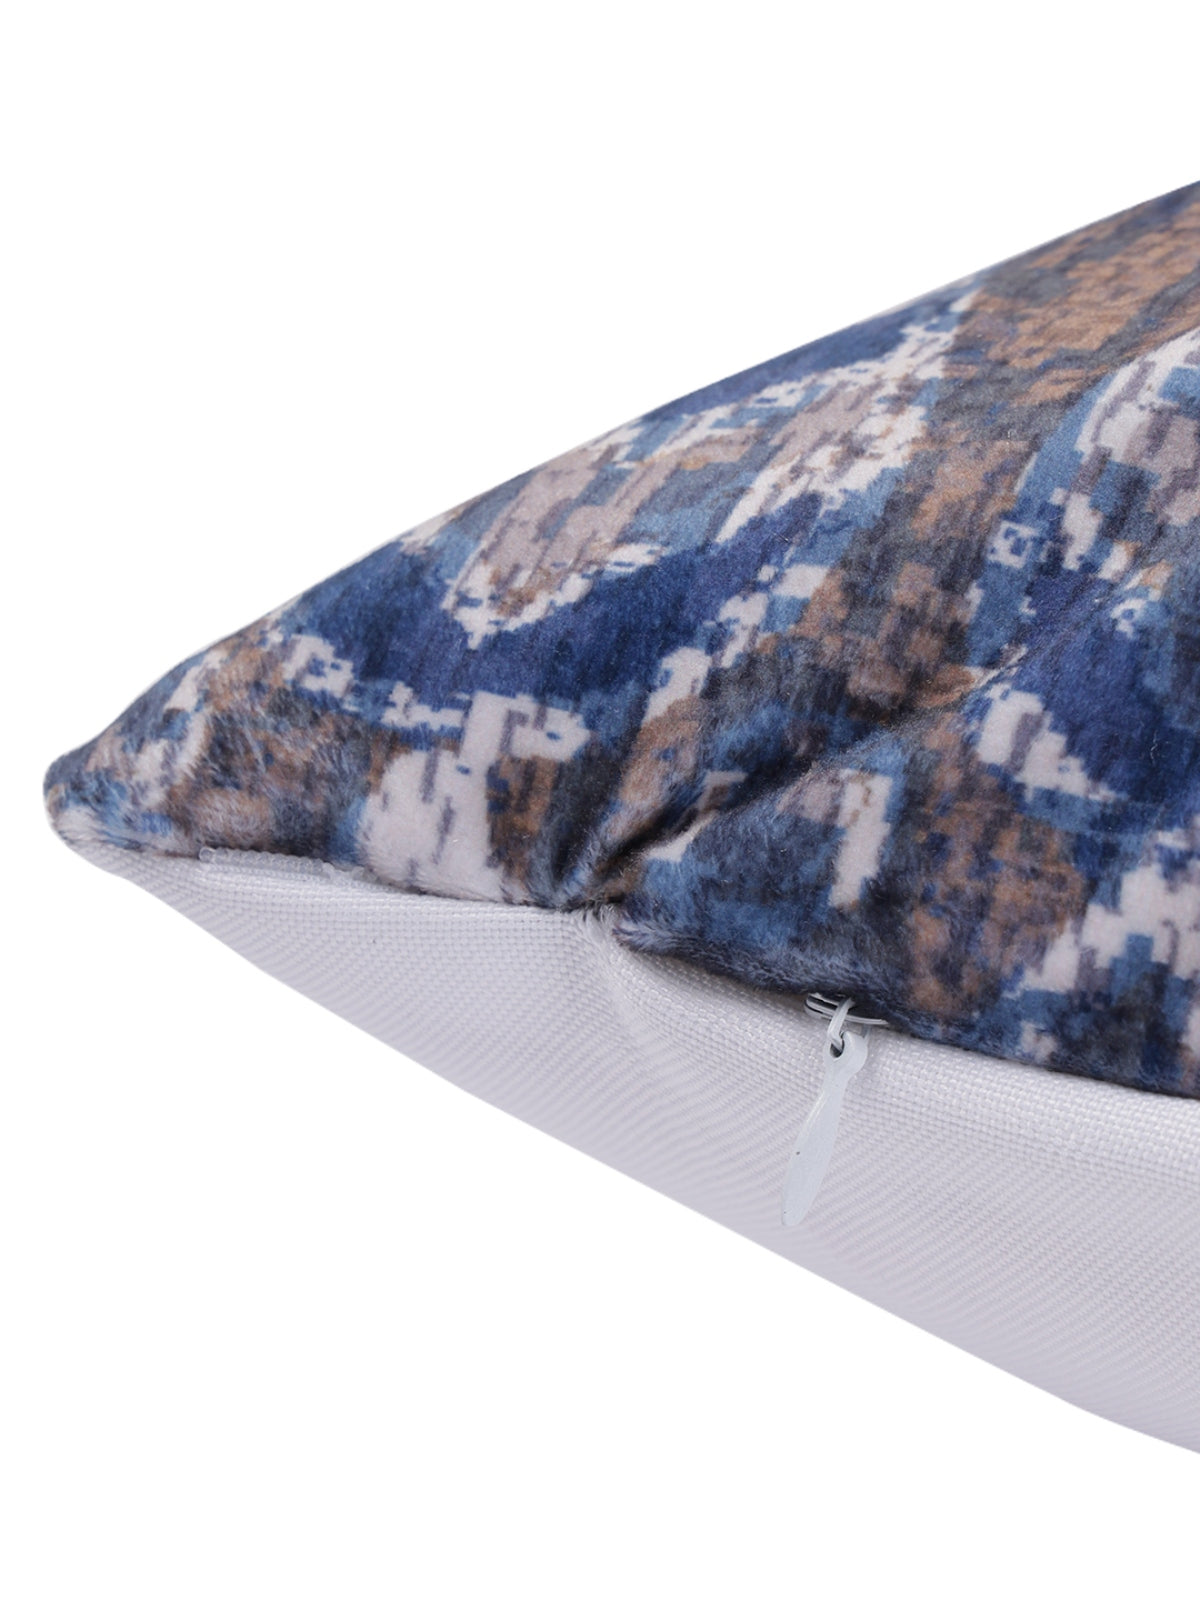 Blue & White Set of 5 Cushion Covers